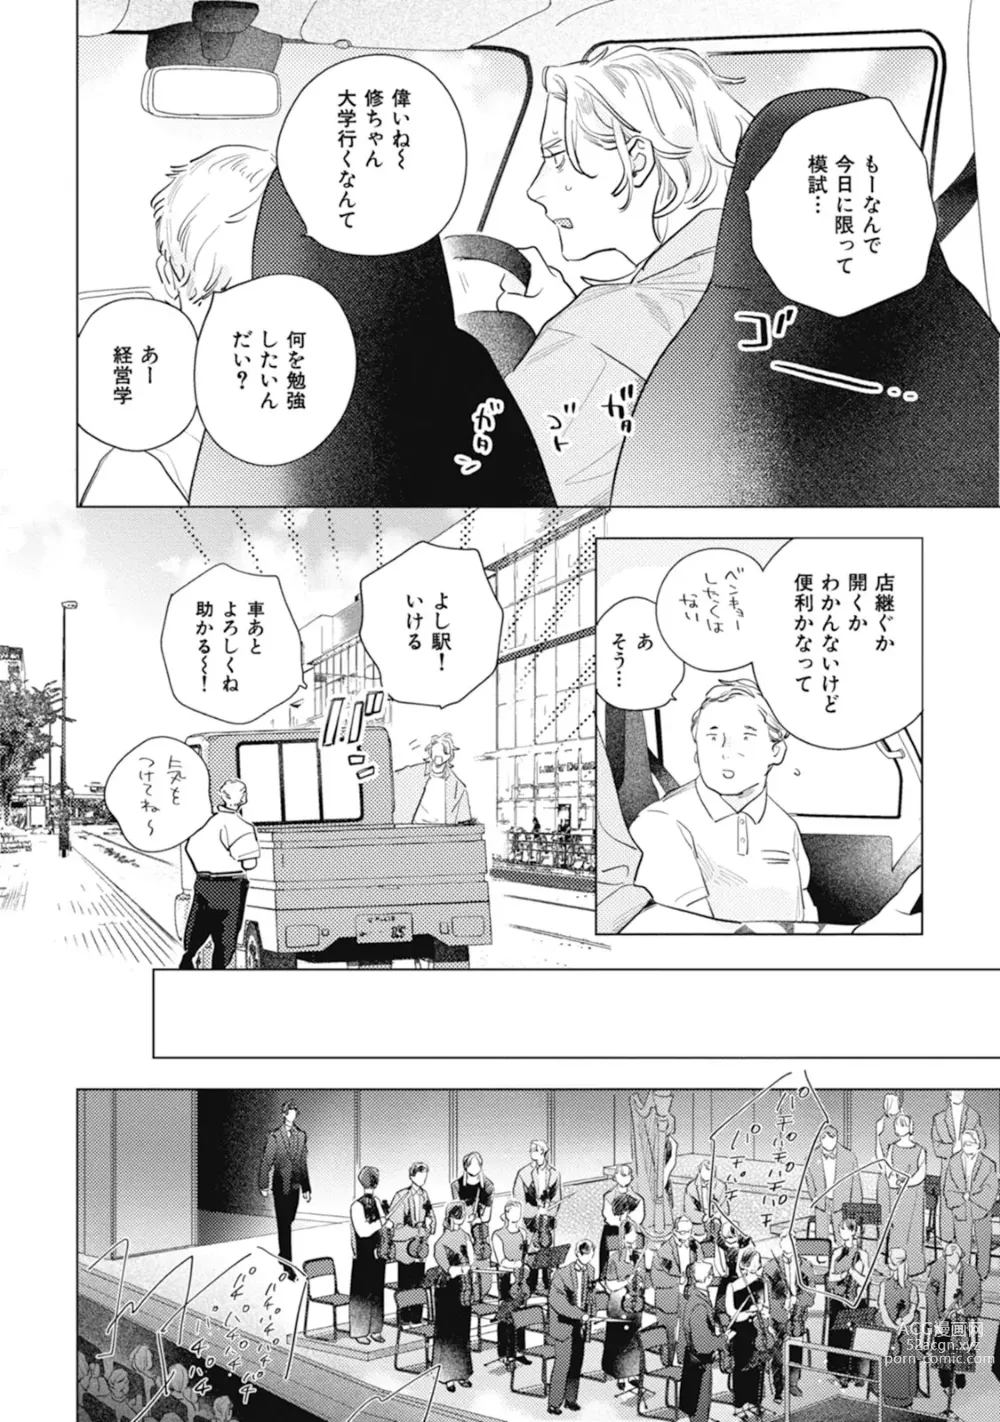 Page 198 of manga Kurikaeshi Ai no Oto